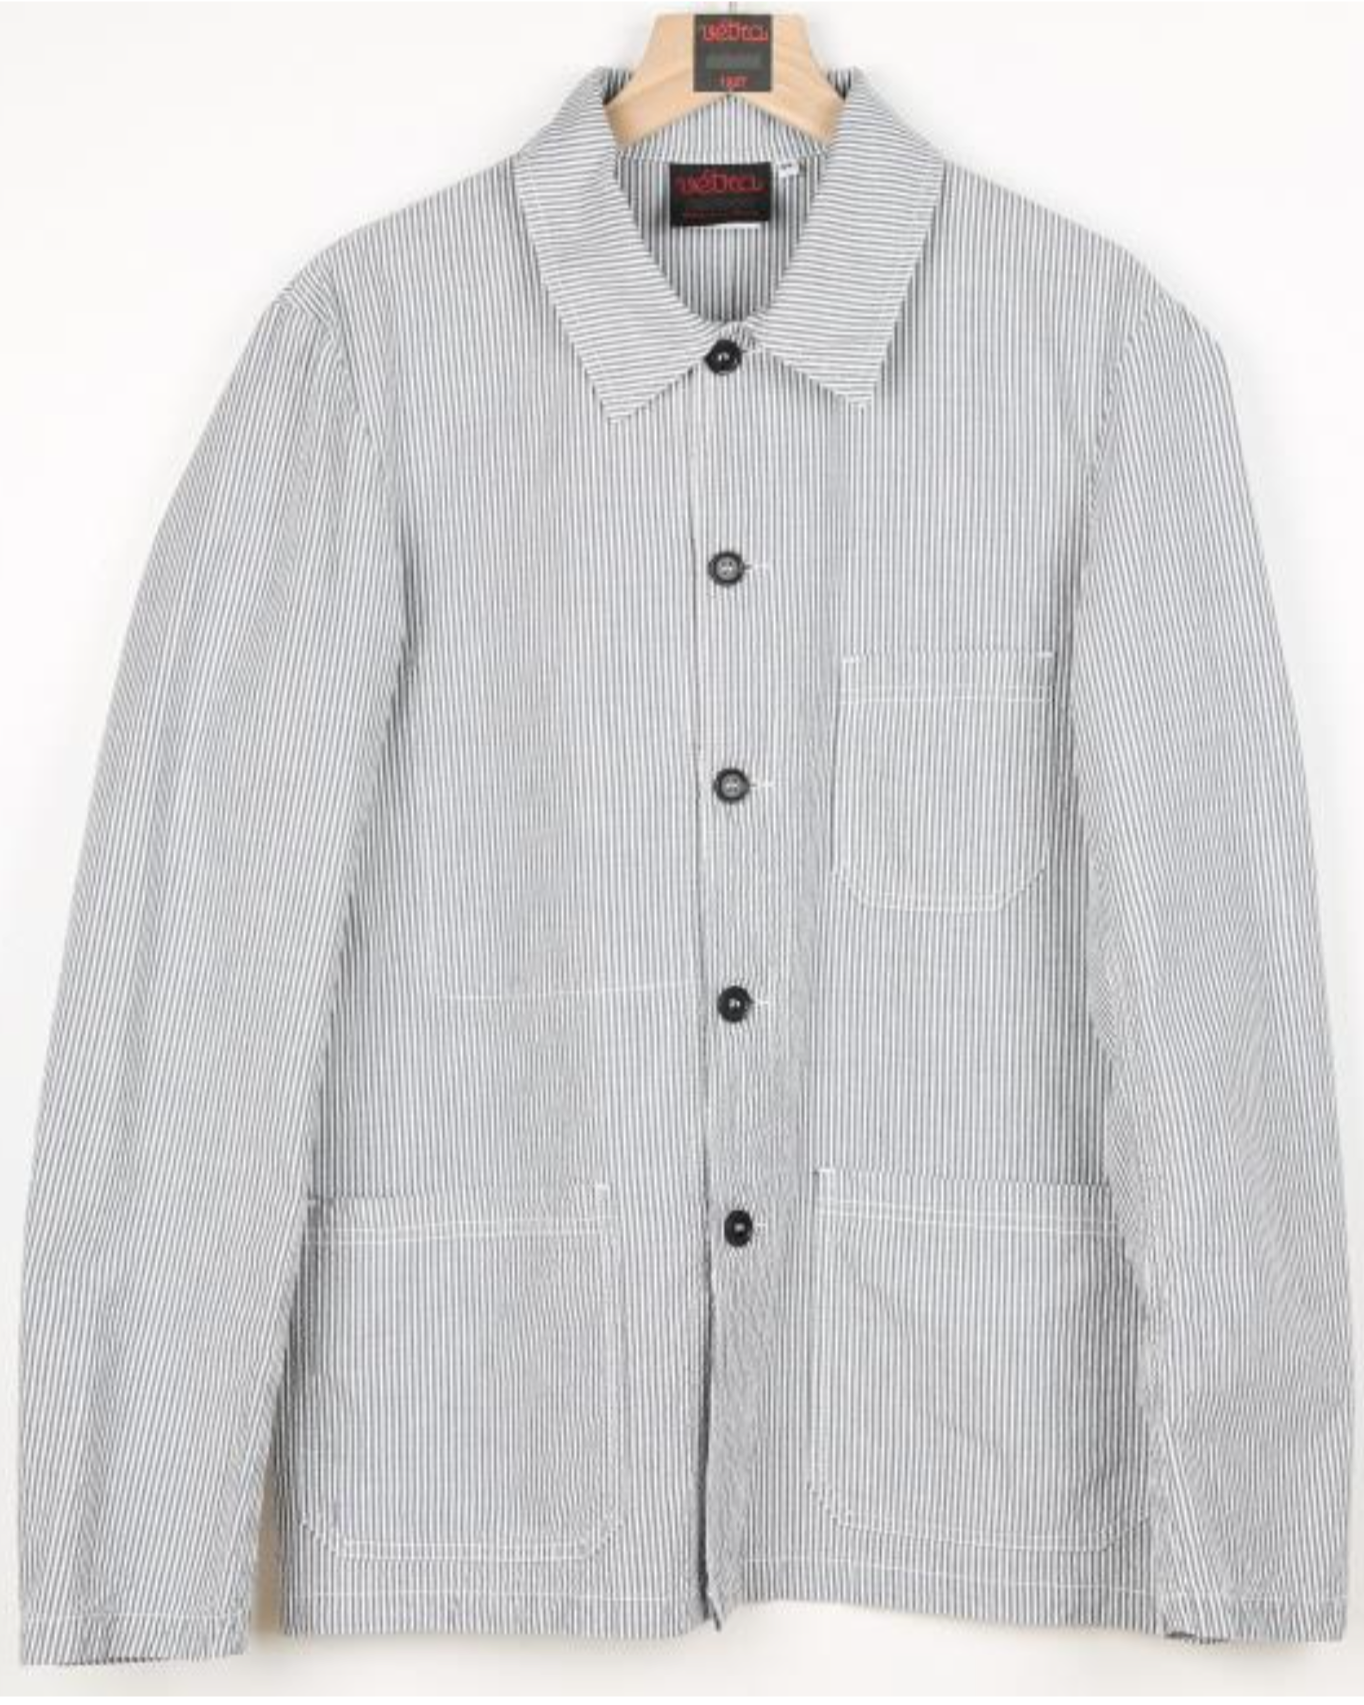 Workwear Jacket 5C in Seersucker 8R12 - White & Black